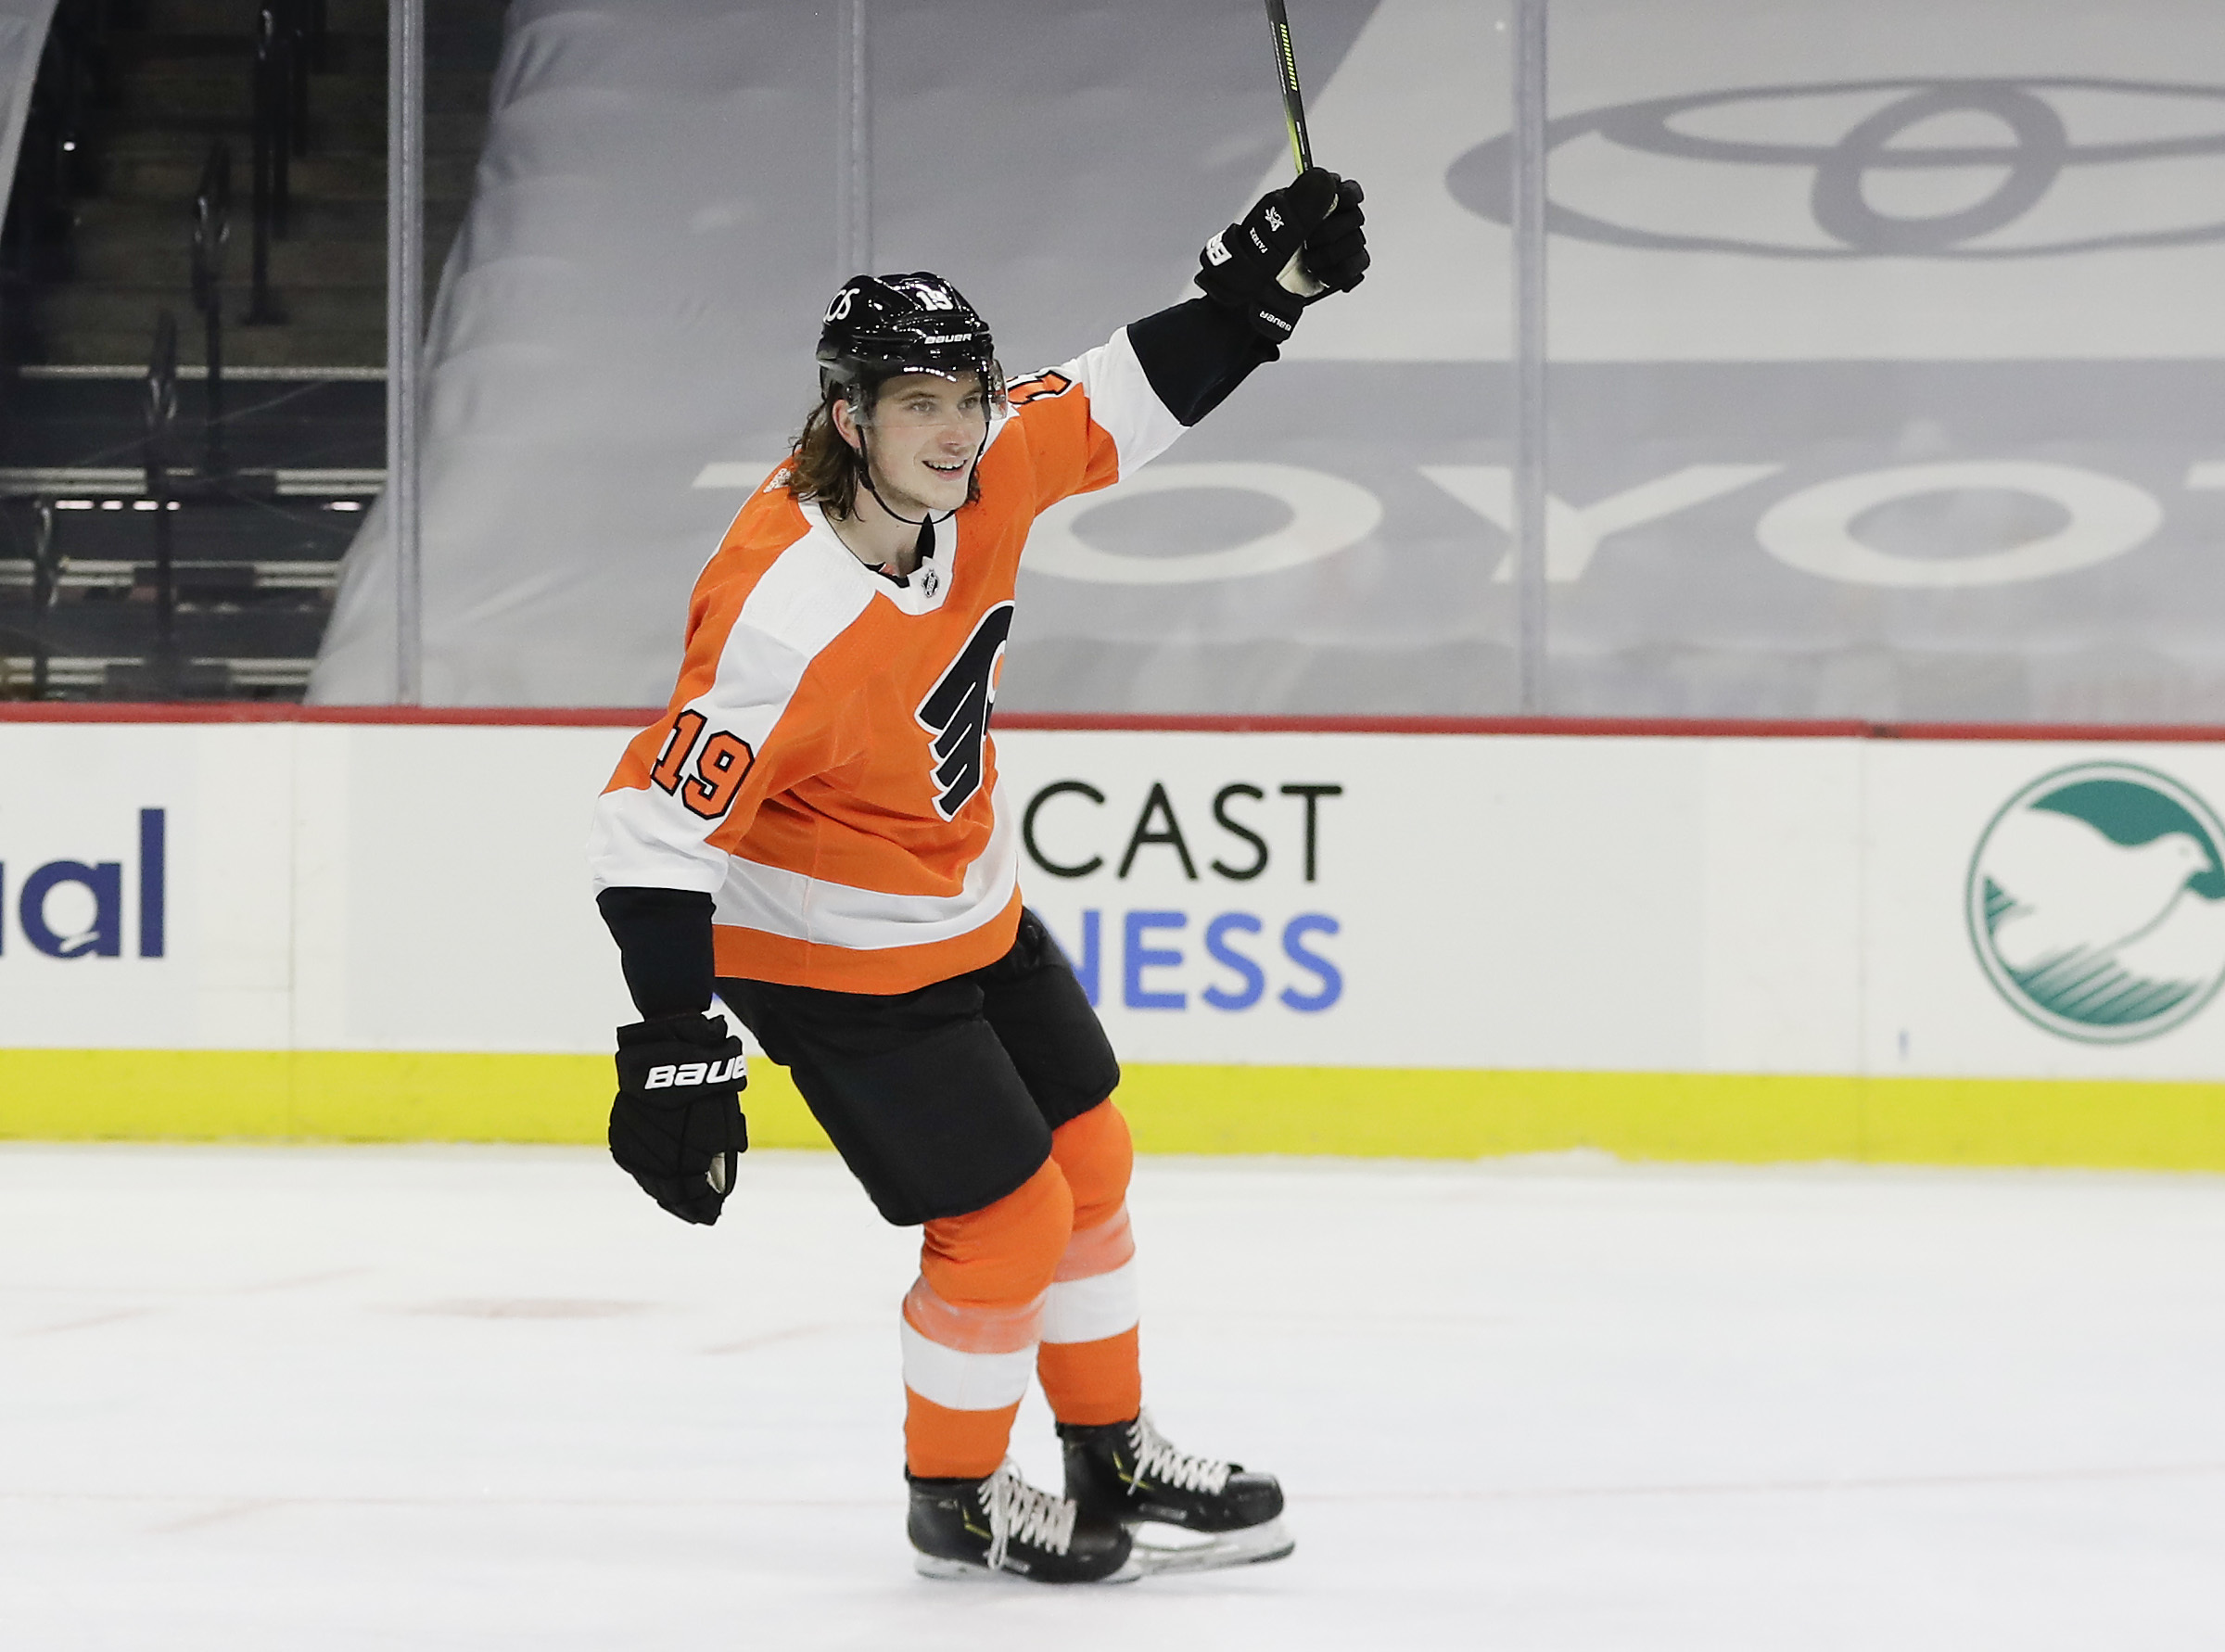 Philadelphia Flyers on X: It's a good day to retweet this.  #NHLAllStarVote Travis Konecny #NHLAllStarVote Travis Konecny  #NHLAllStarVote Travis Konecny #NHLAllStarVote Travis Konecny  #NHLAllStarVote Travis Konecny #NHLAllStarVote Travis Konecny